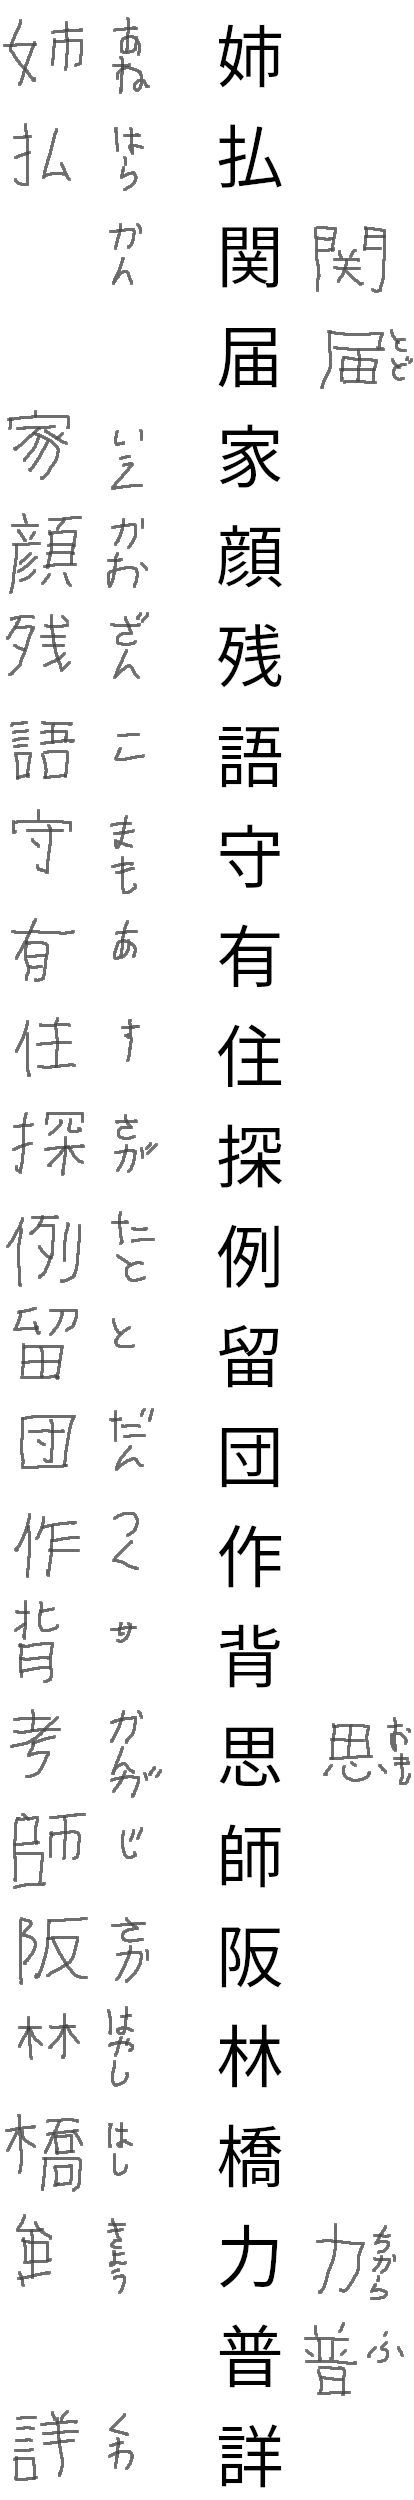 kanji test row 24